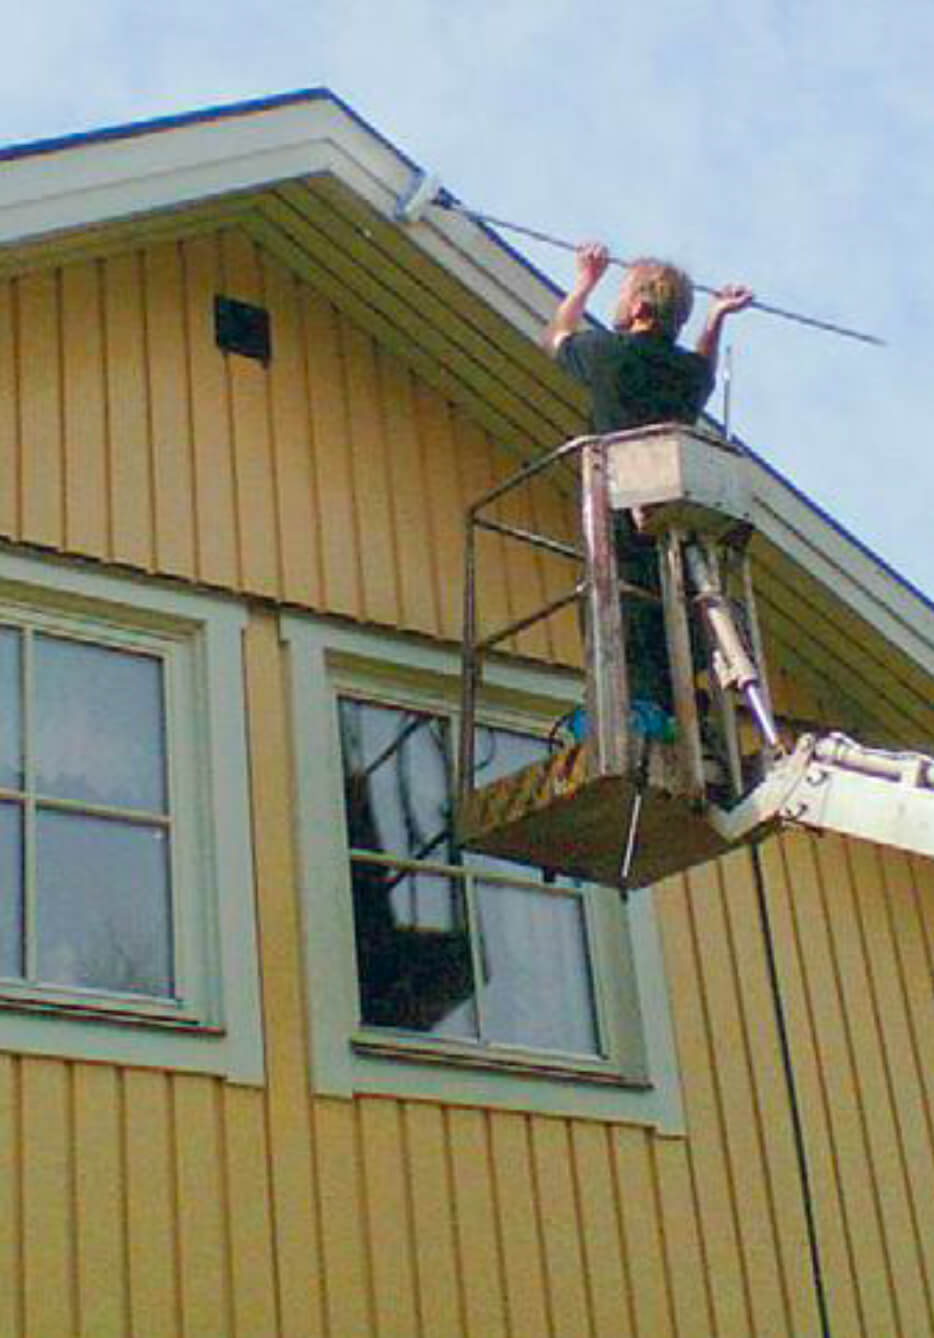 Jape Underhallstvatt Facade cleaner on roof